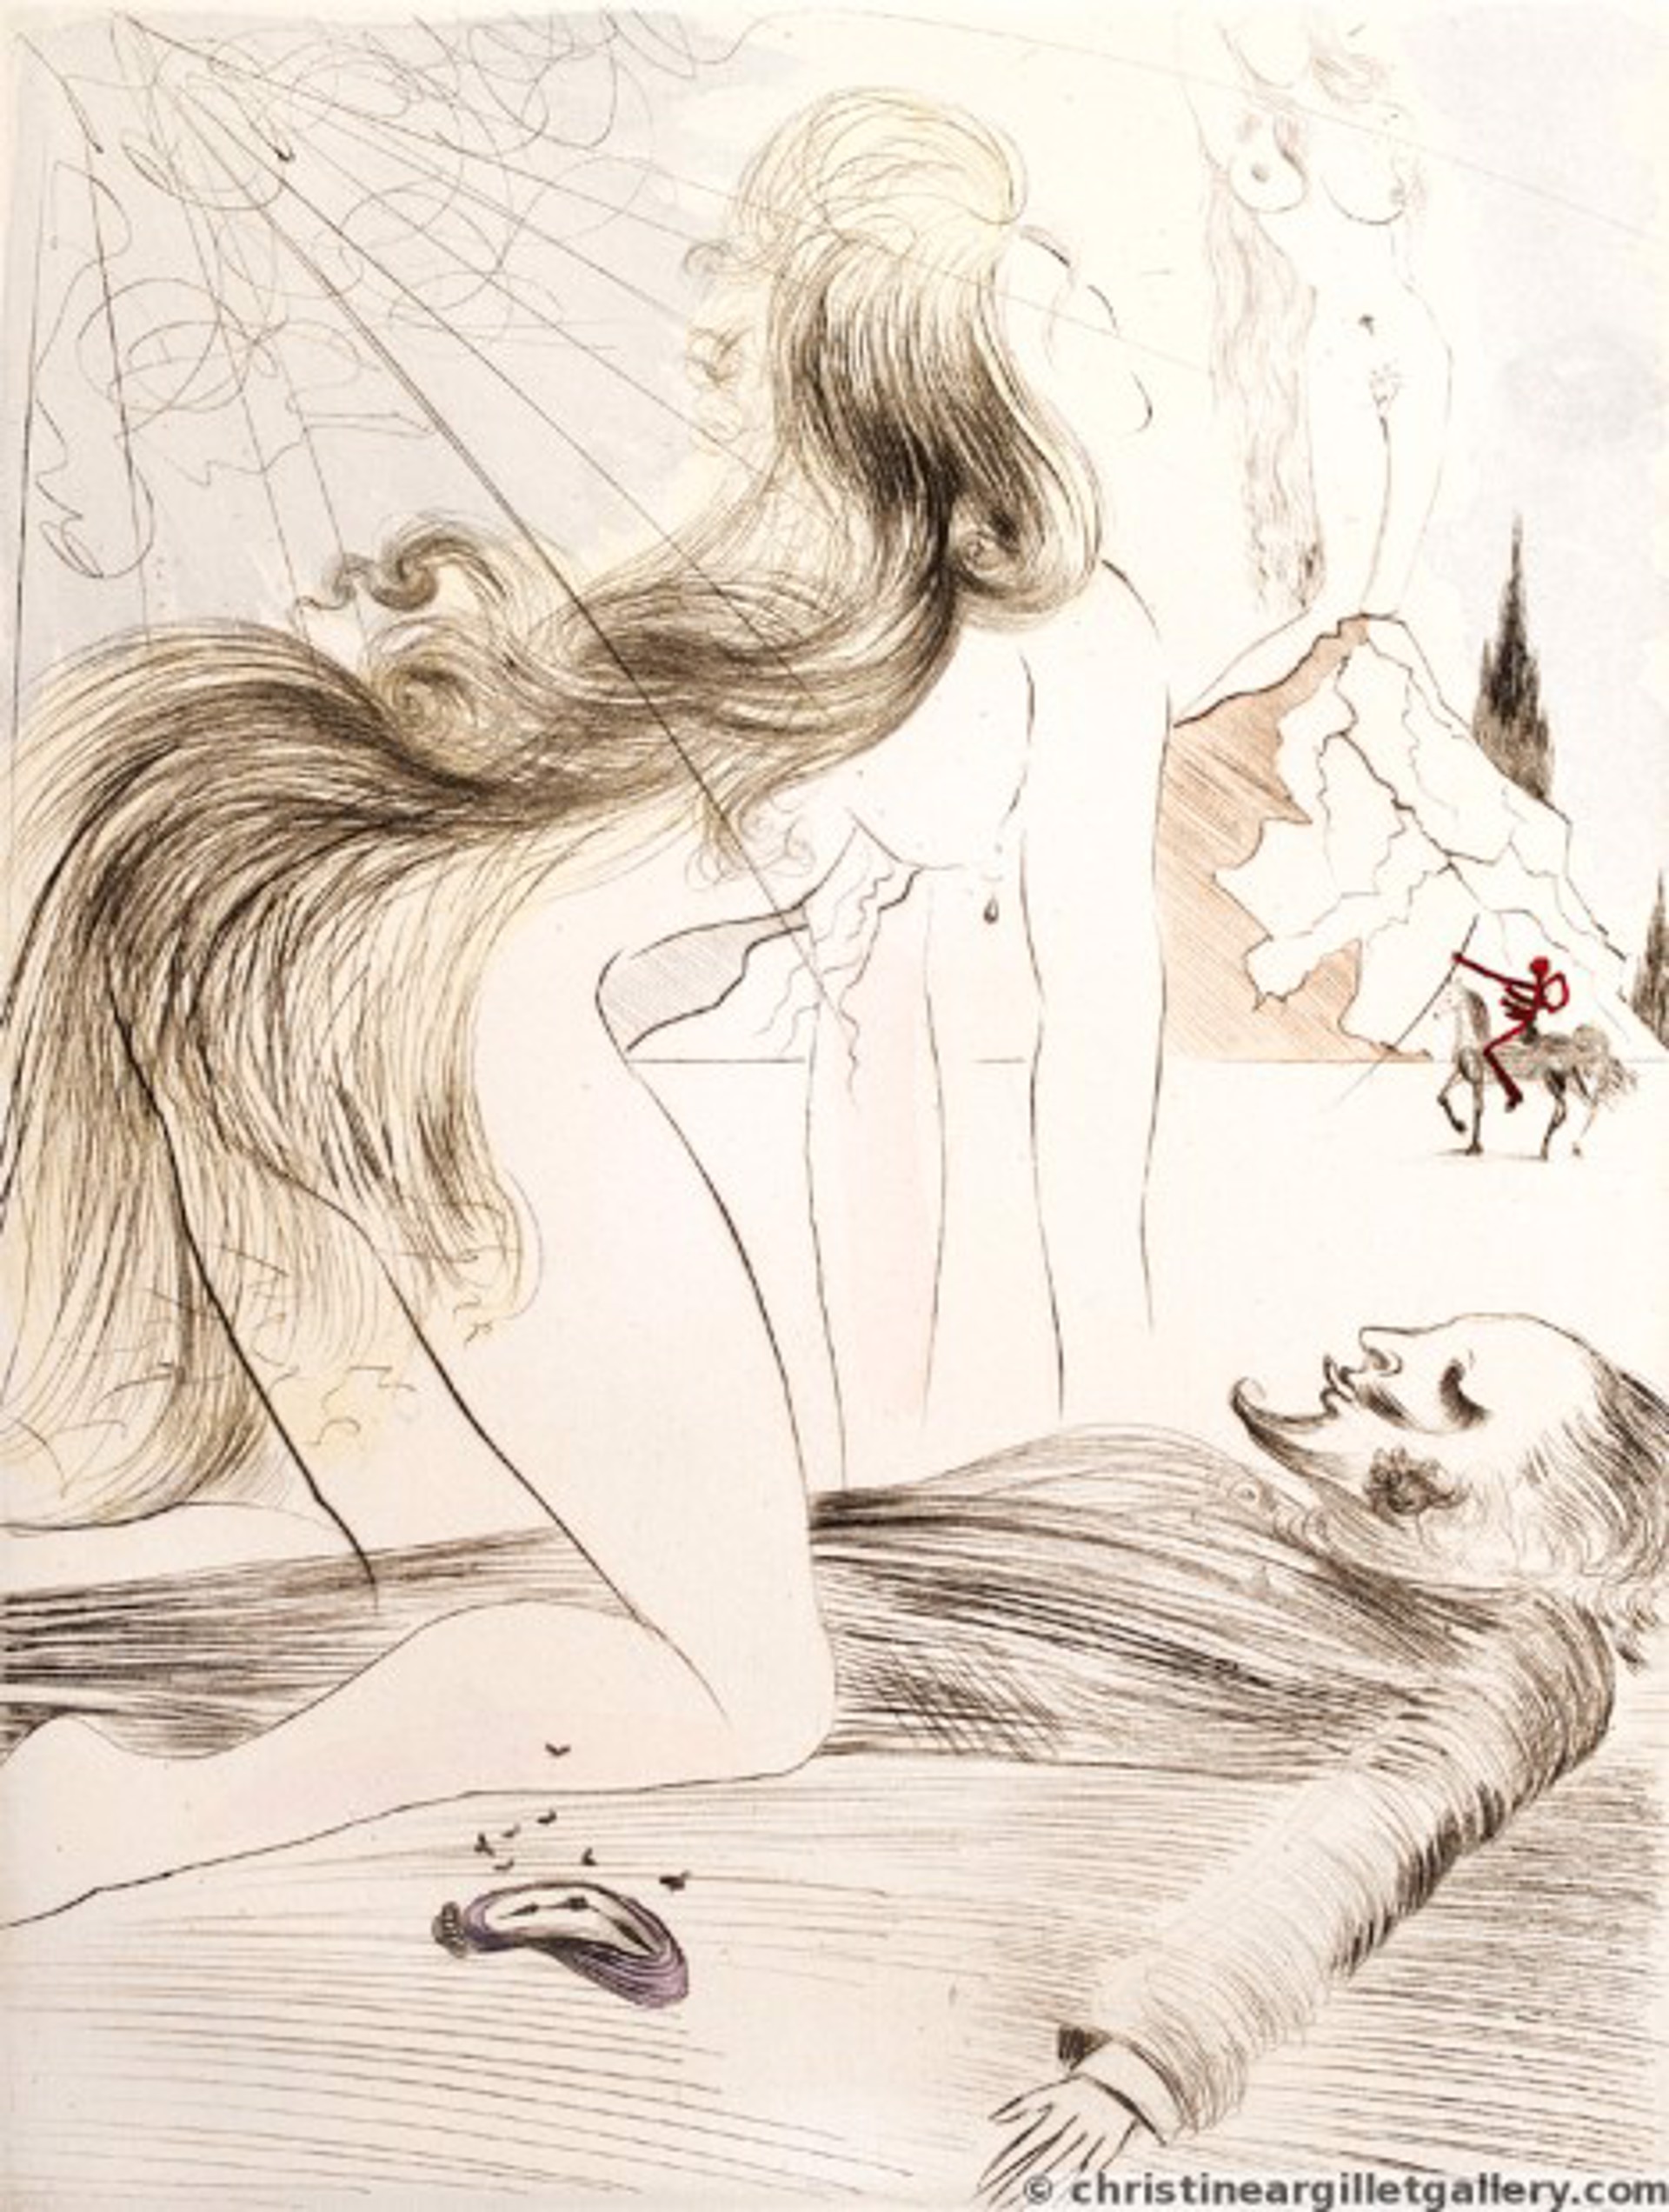 Venus in Furs  "Kneeling Woman" by Salvador Dali